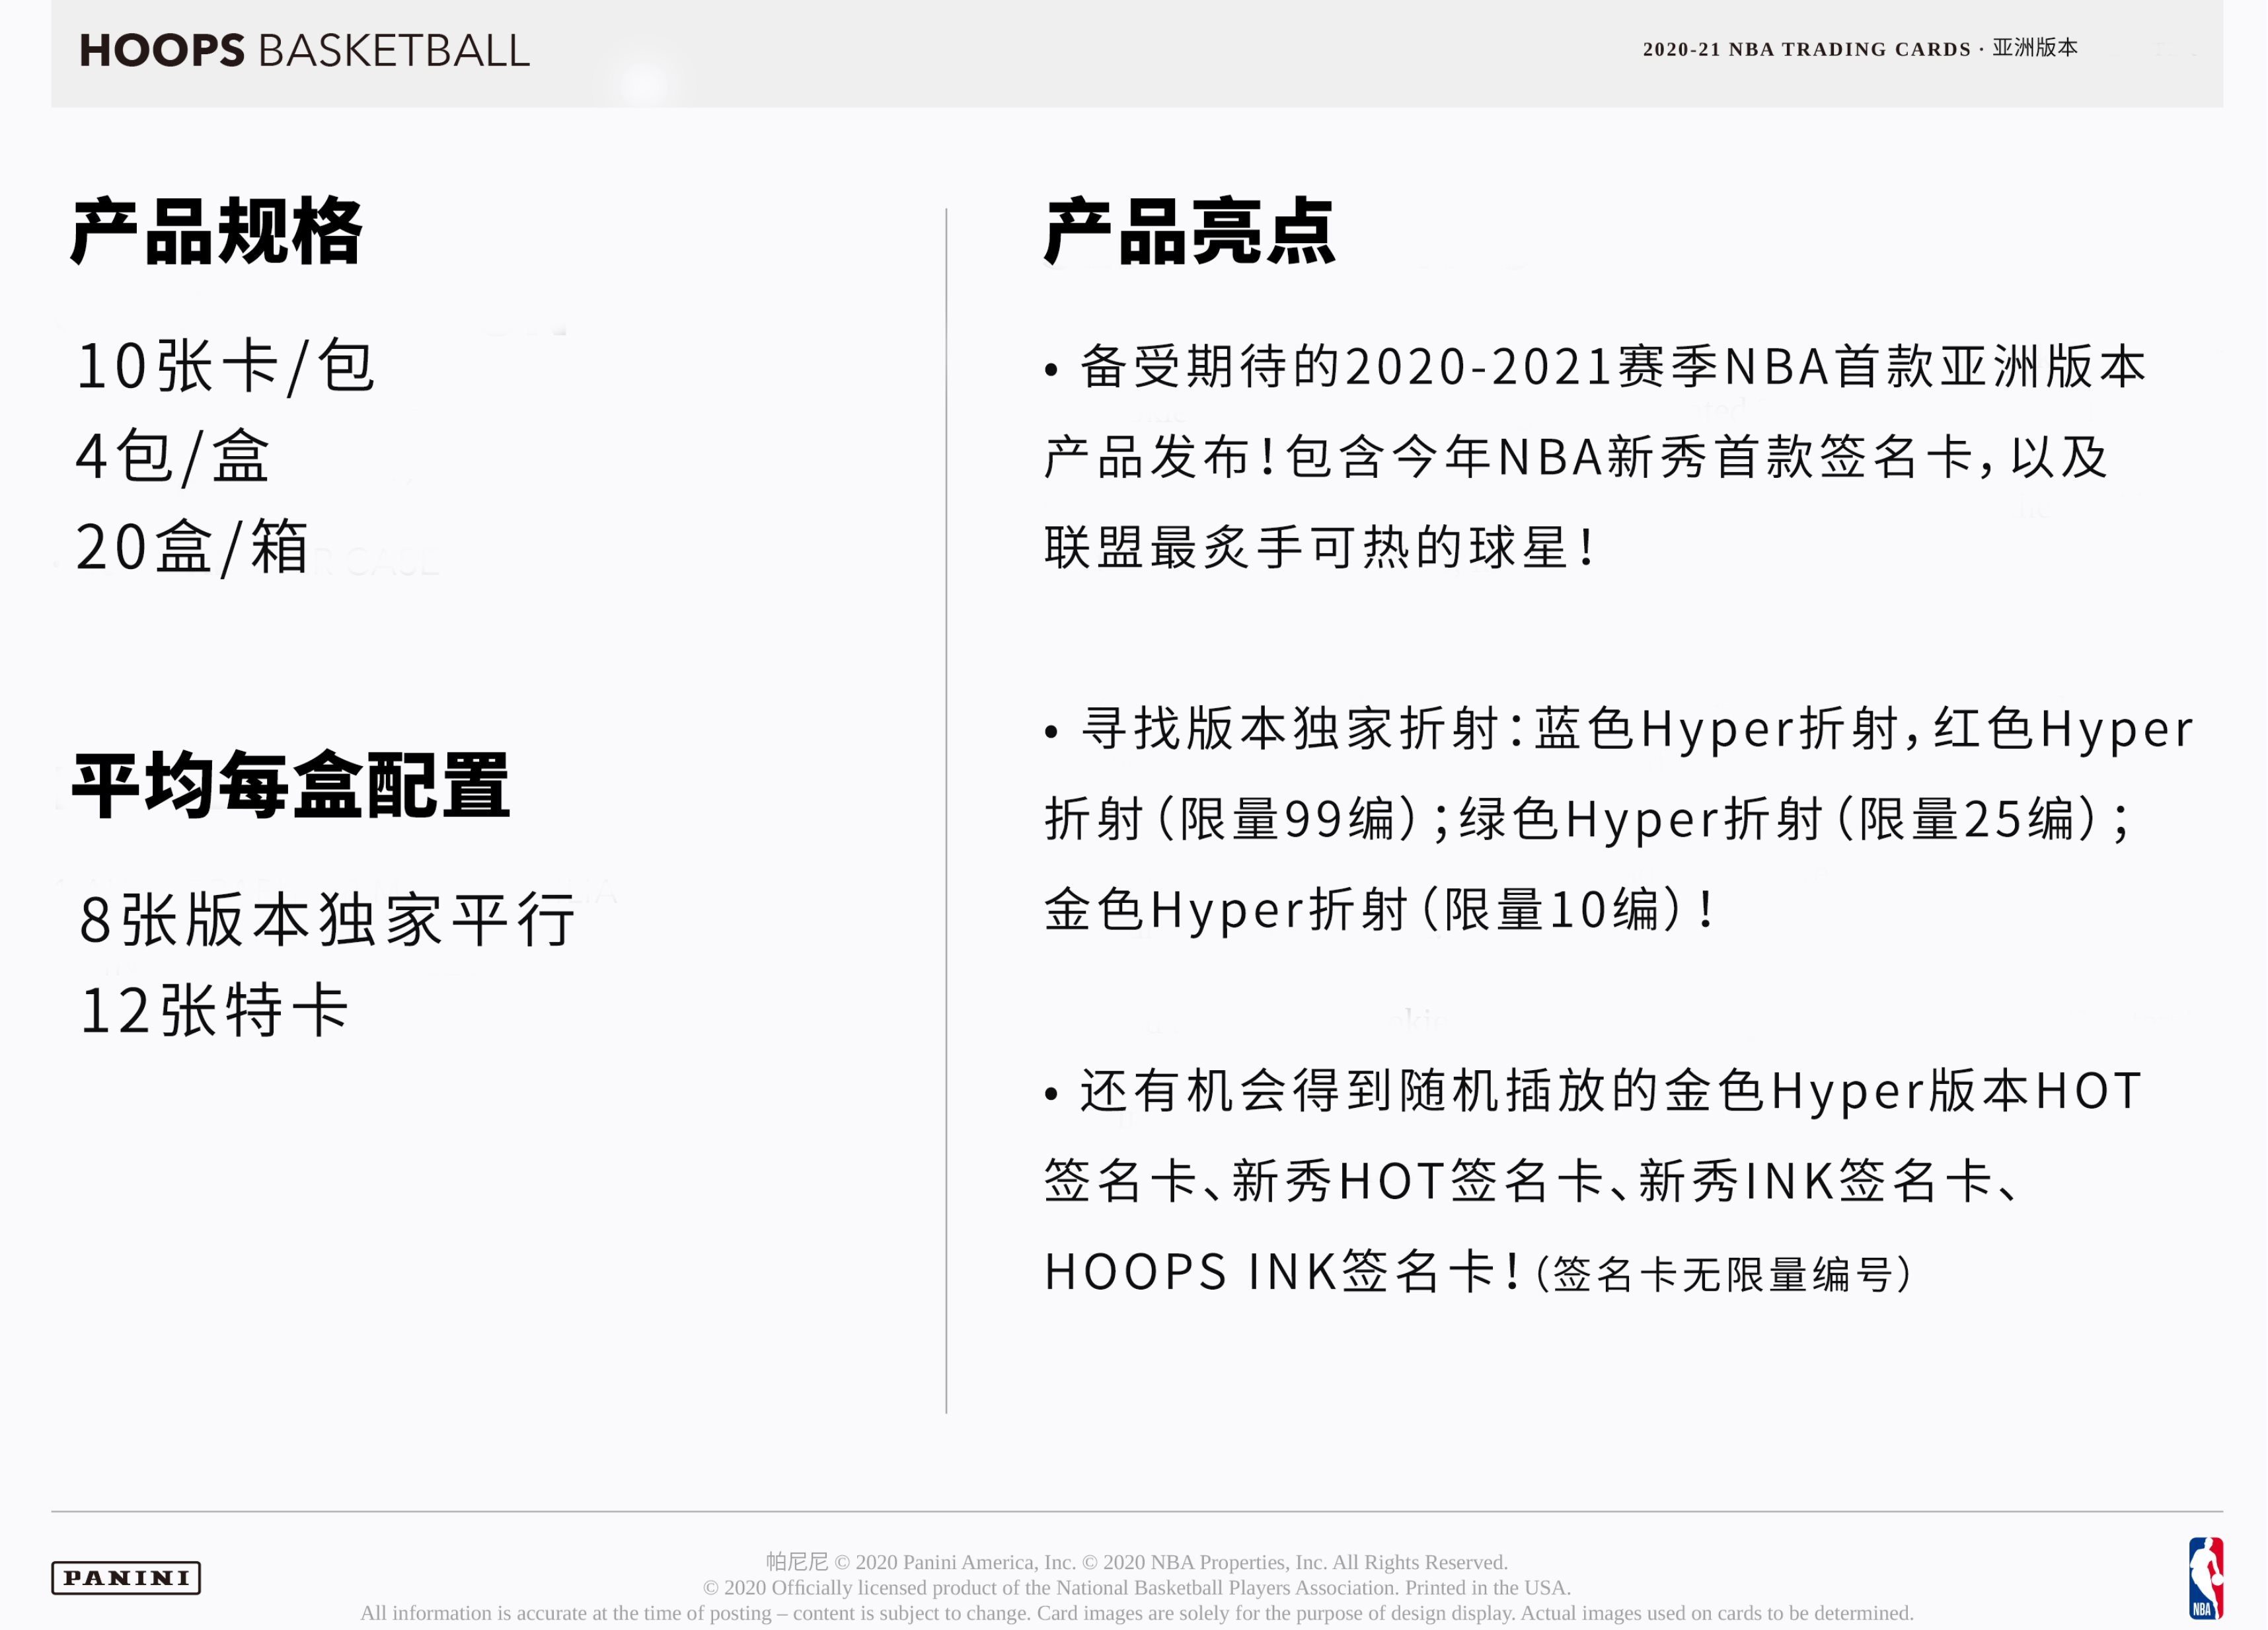 2020-21 HOOPS BASKETBALL ASIA 亚版 完整箱